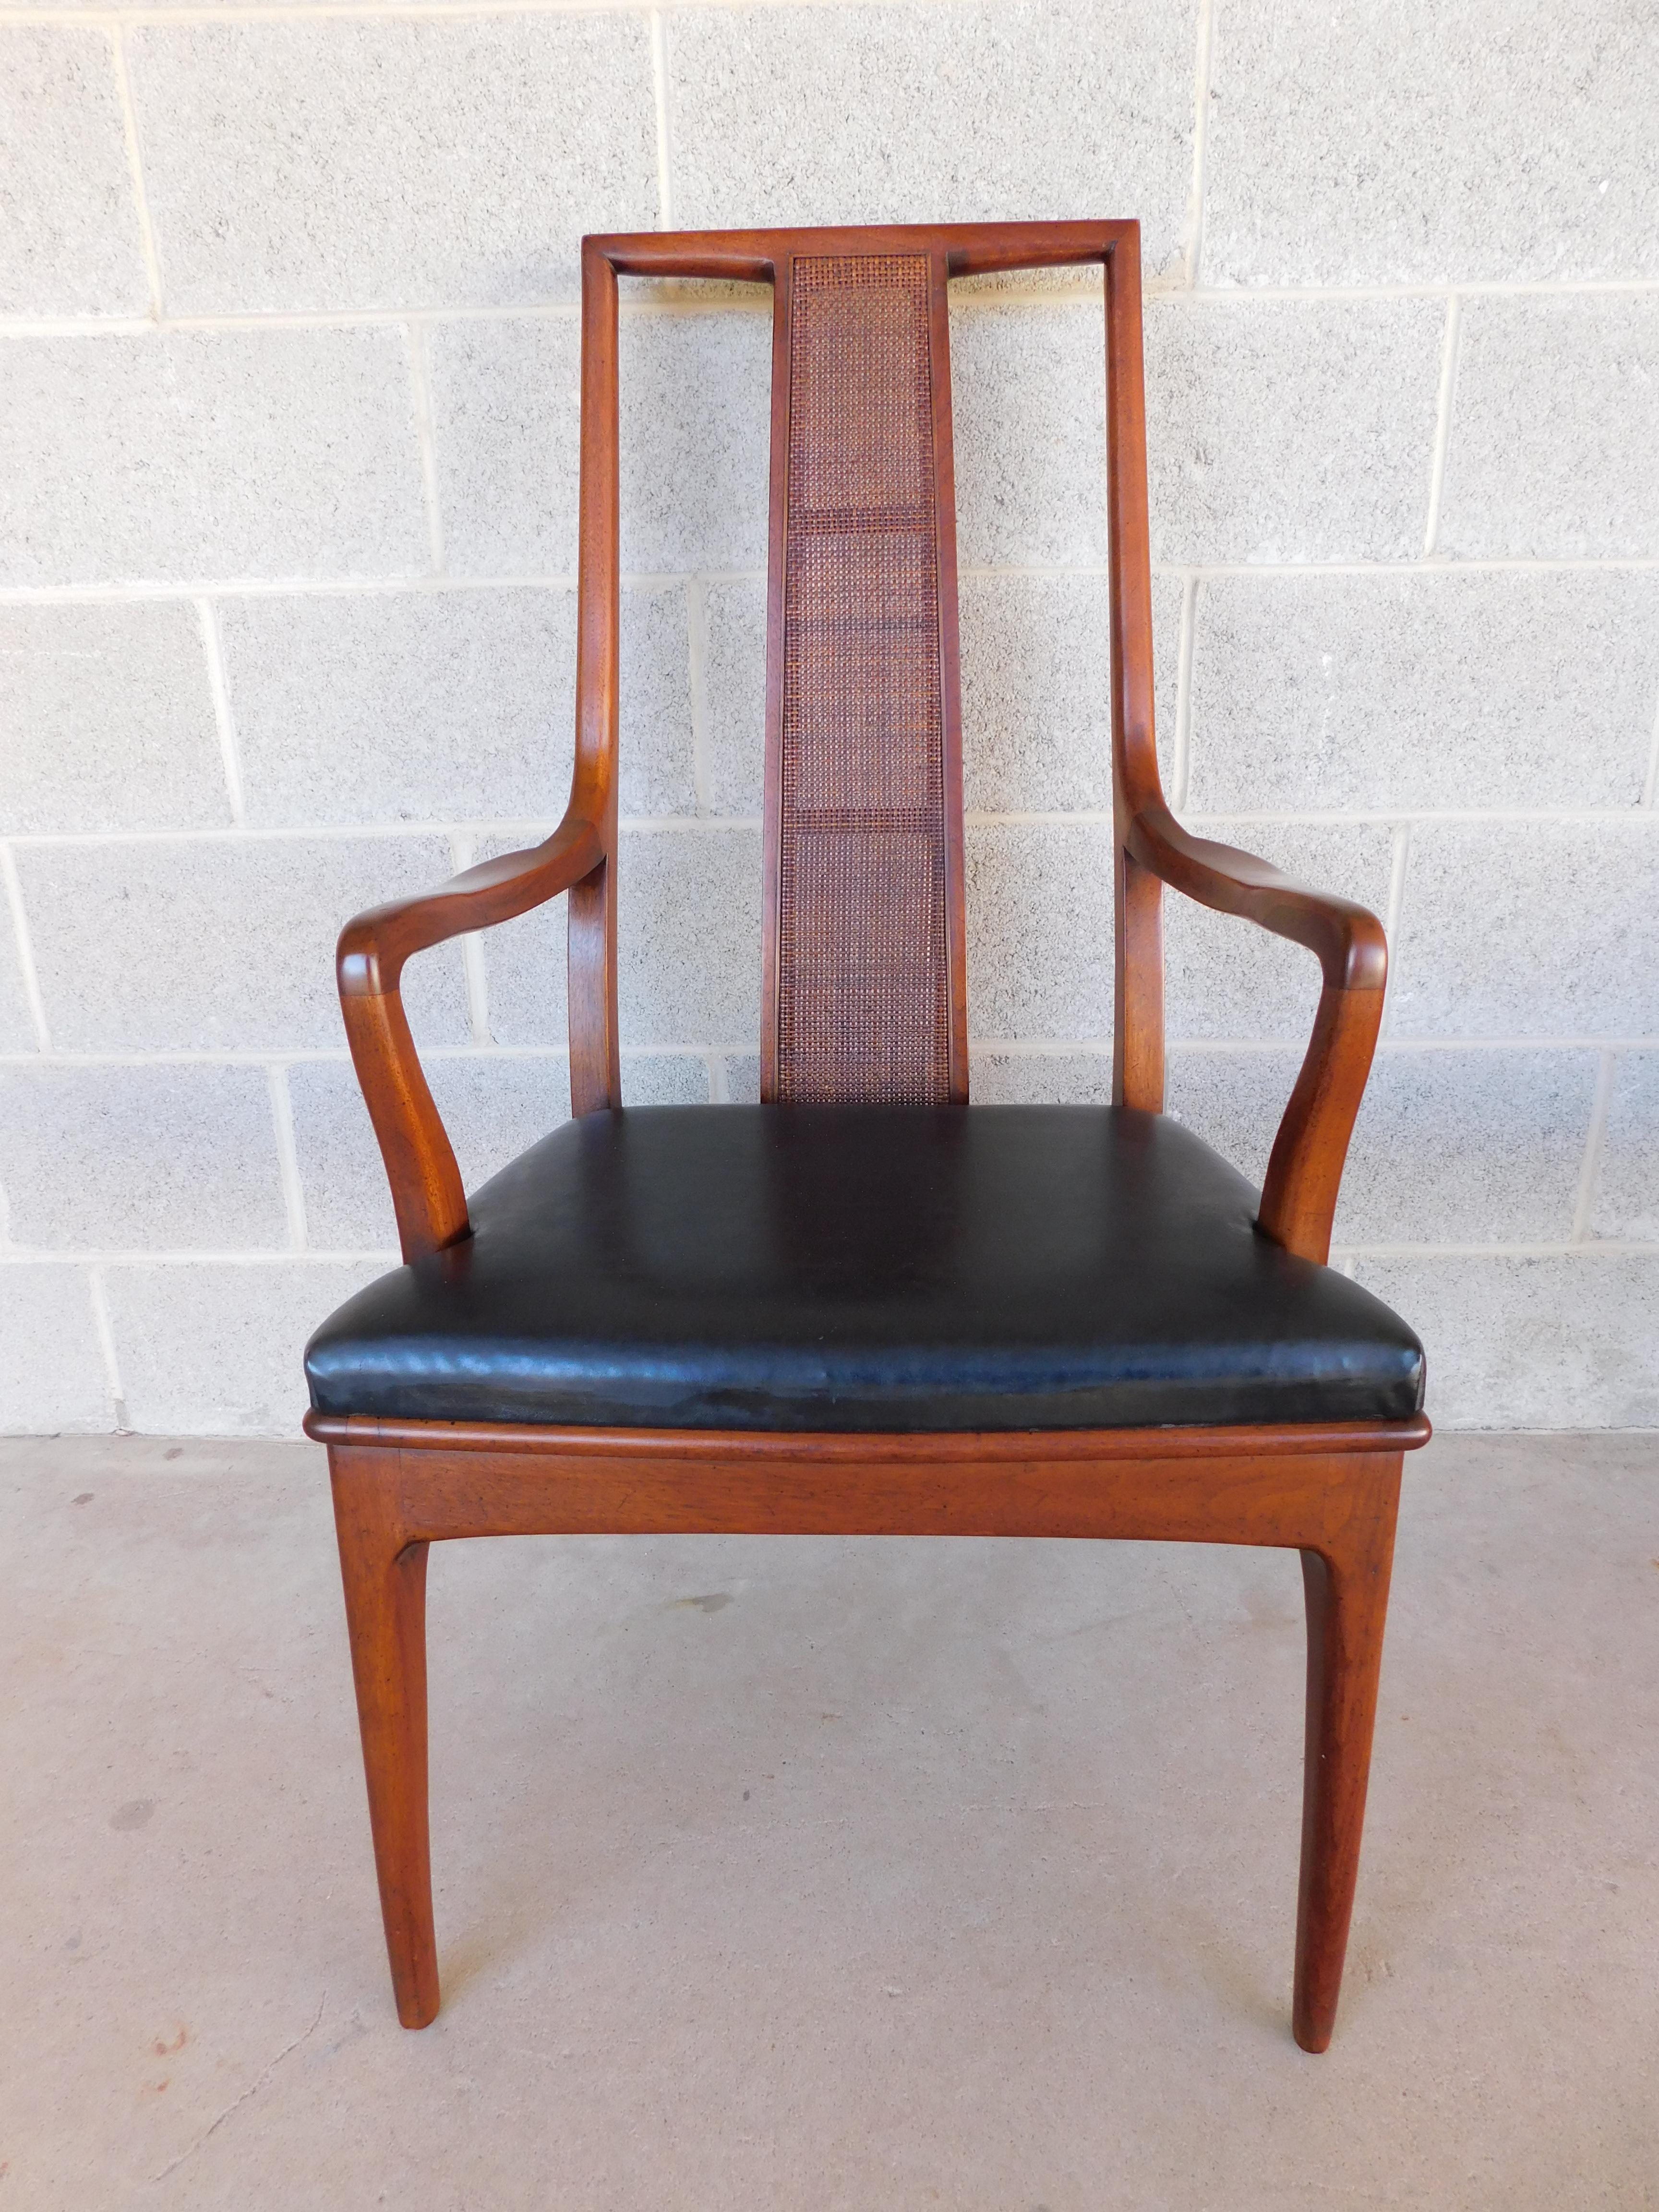 Mount Airy Chair Co. Mid Century John Stuart Walnut Dining Chairs - Set of 6 8